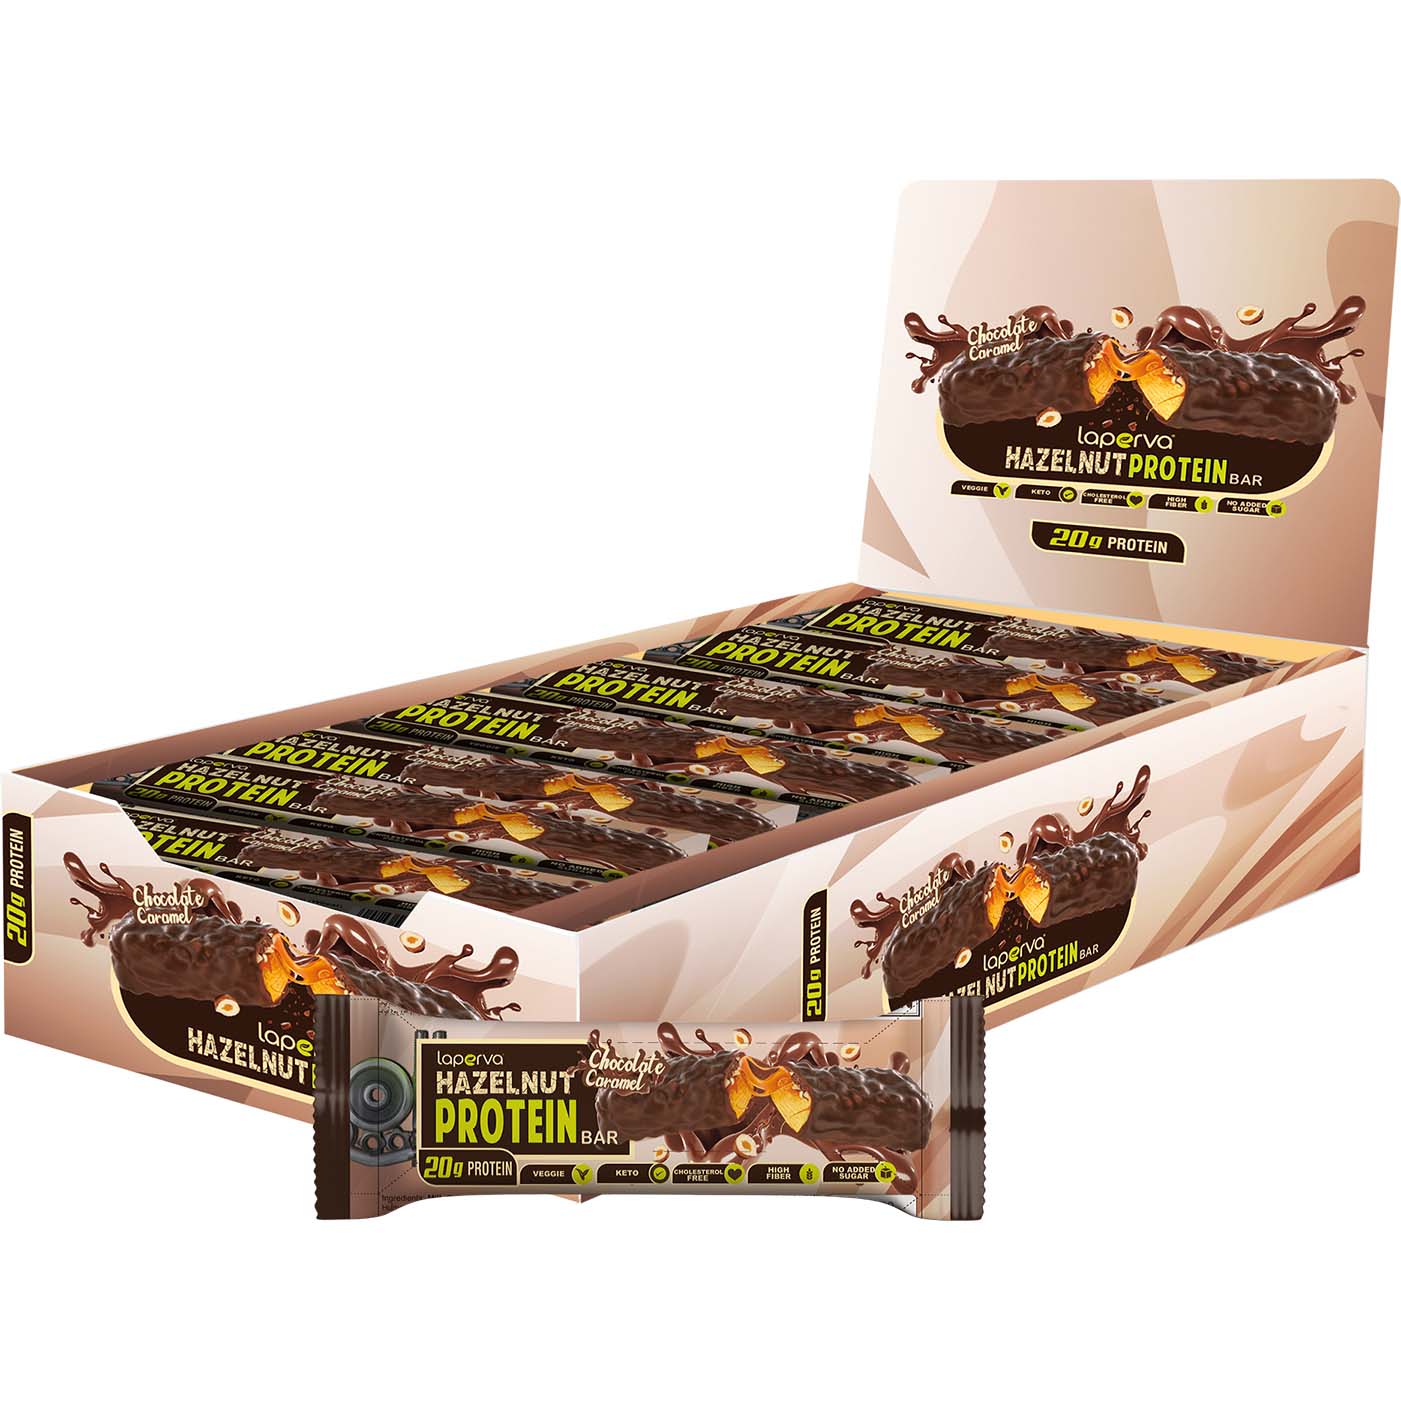 Laperva Hazelnut Protein Bar Box of 18 Bars Chocolate Caramel